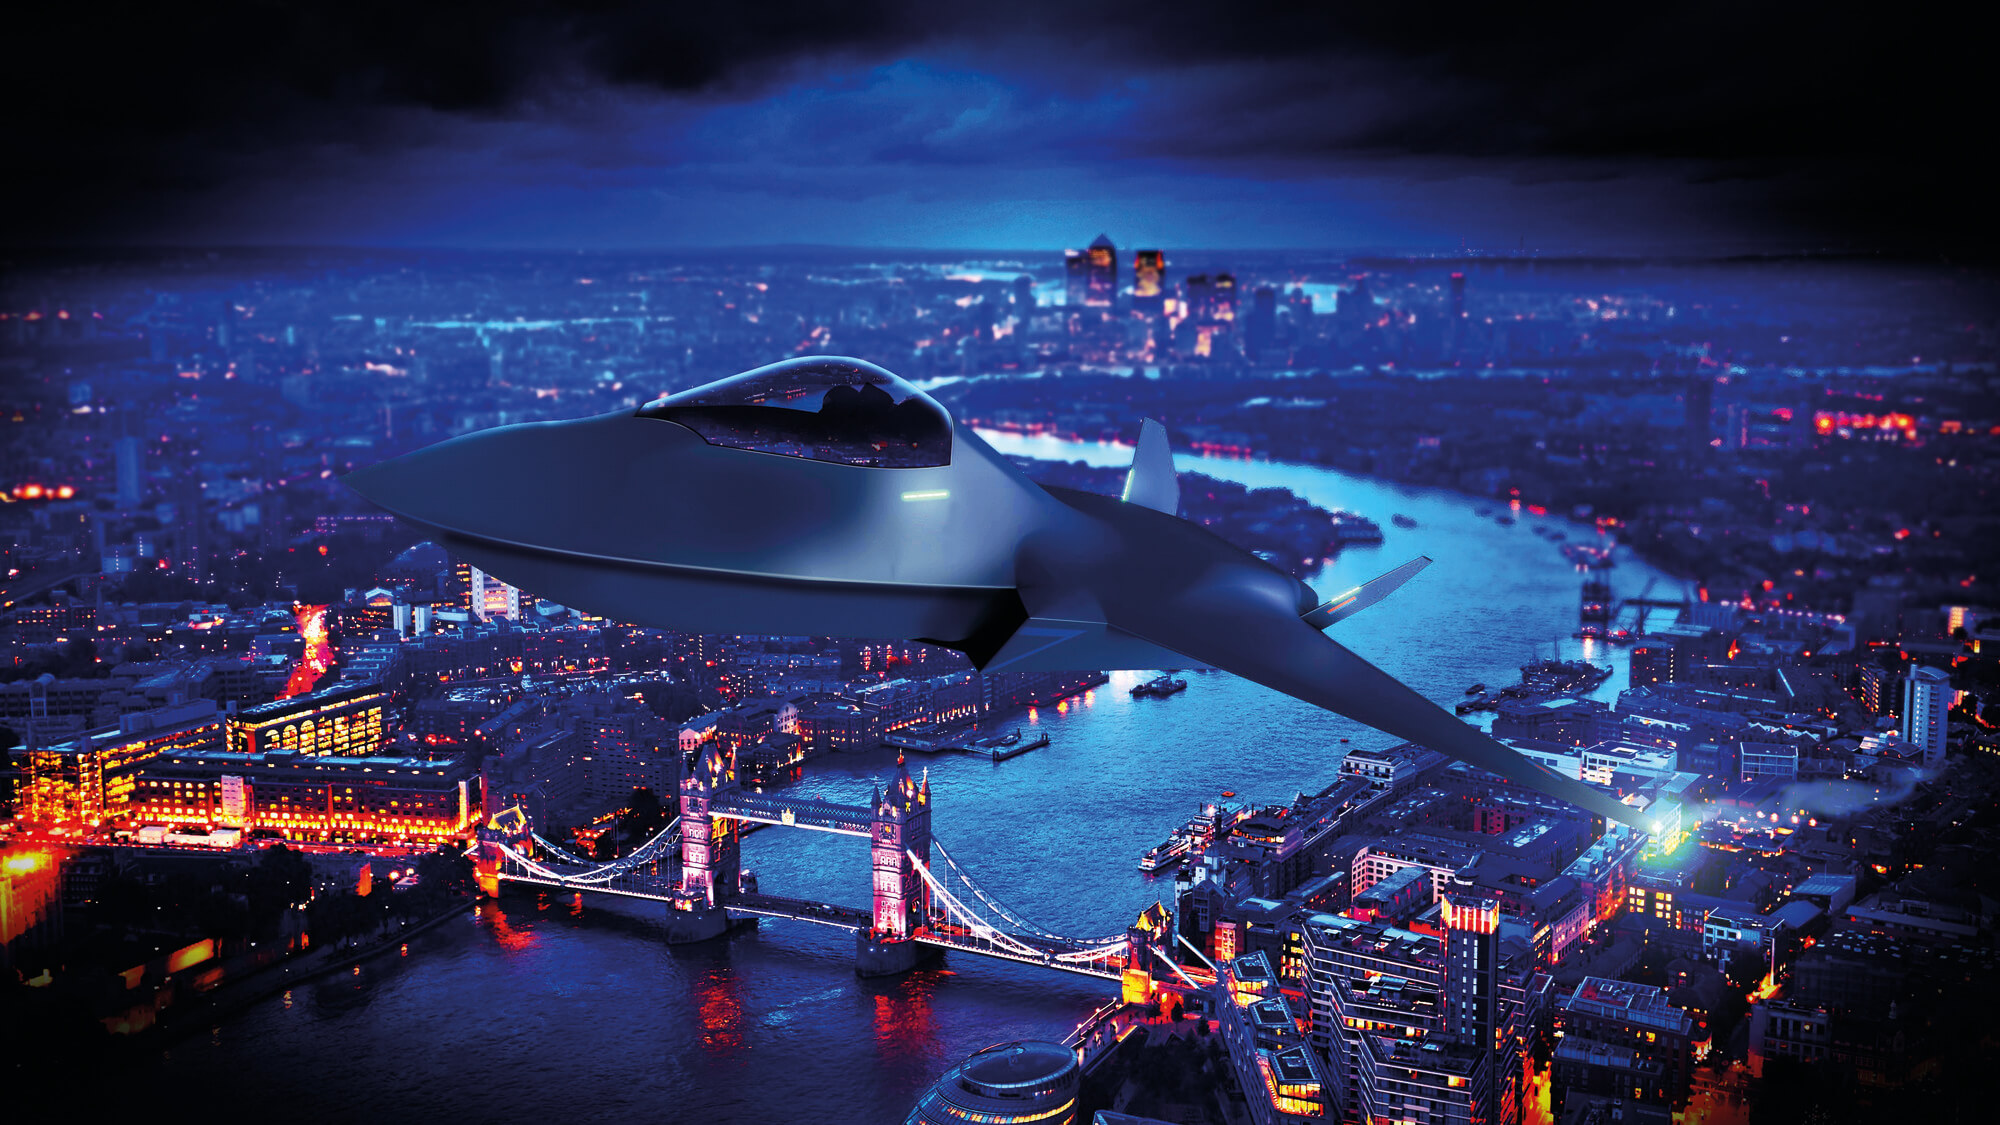 Futuristic image of aircraft flying over illuminated London landmarks at night.